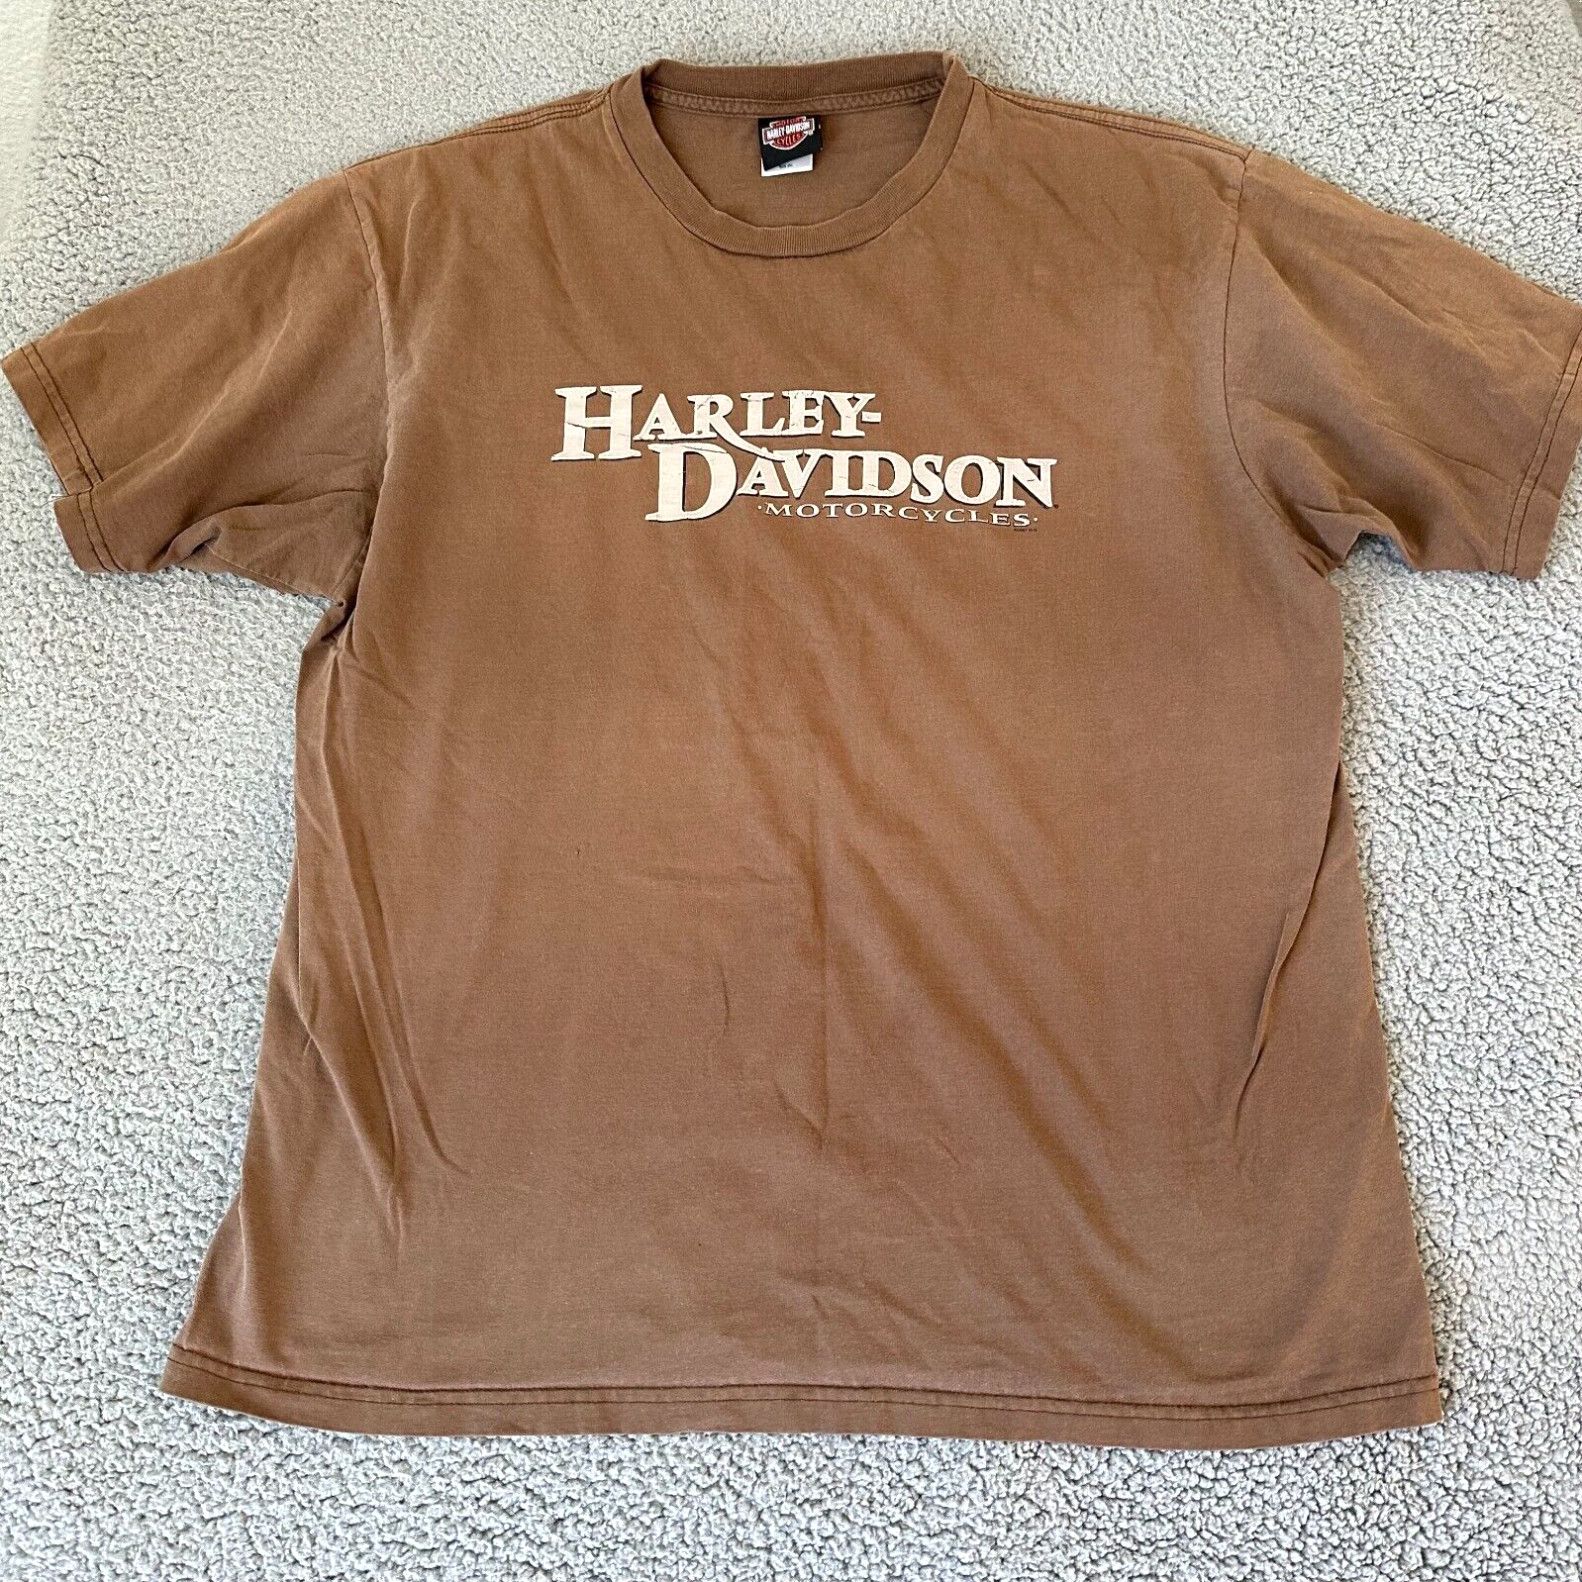 Harley Davidson Harley Davidson Shirt Adult 2XL XXL Brown Mens Casual Biker Made in USA Size US XXL / EU 58 / 5 - 1 Preview